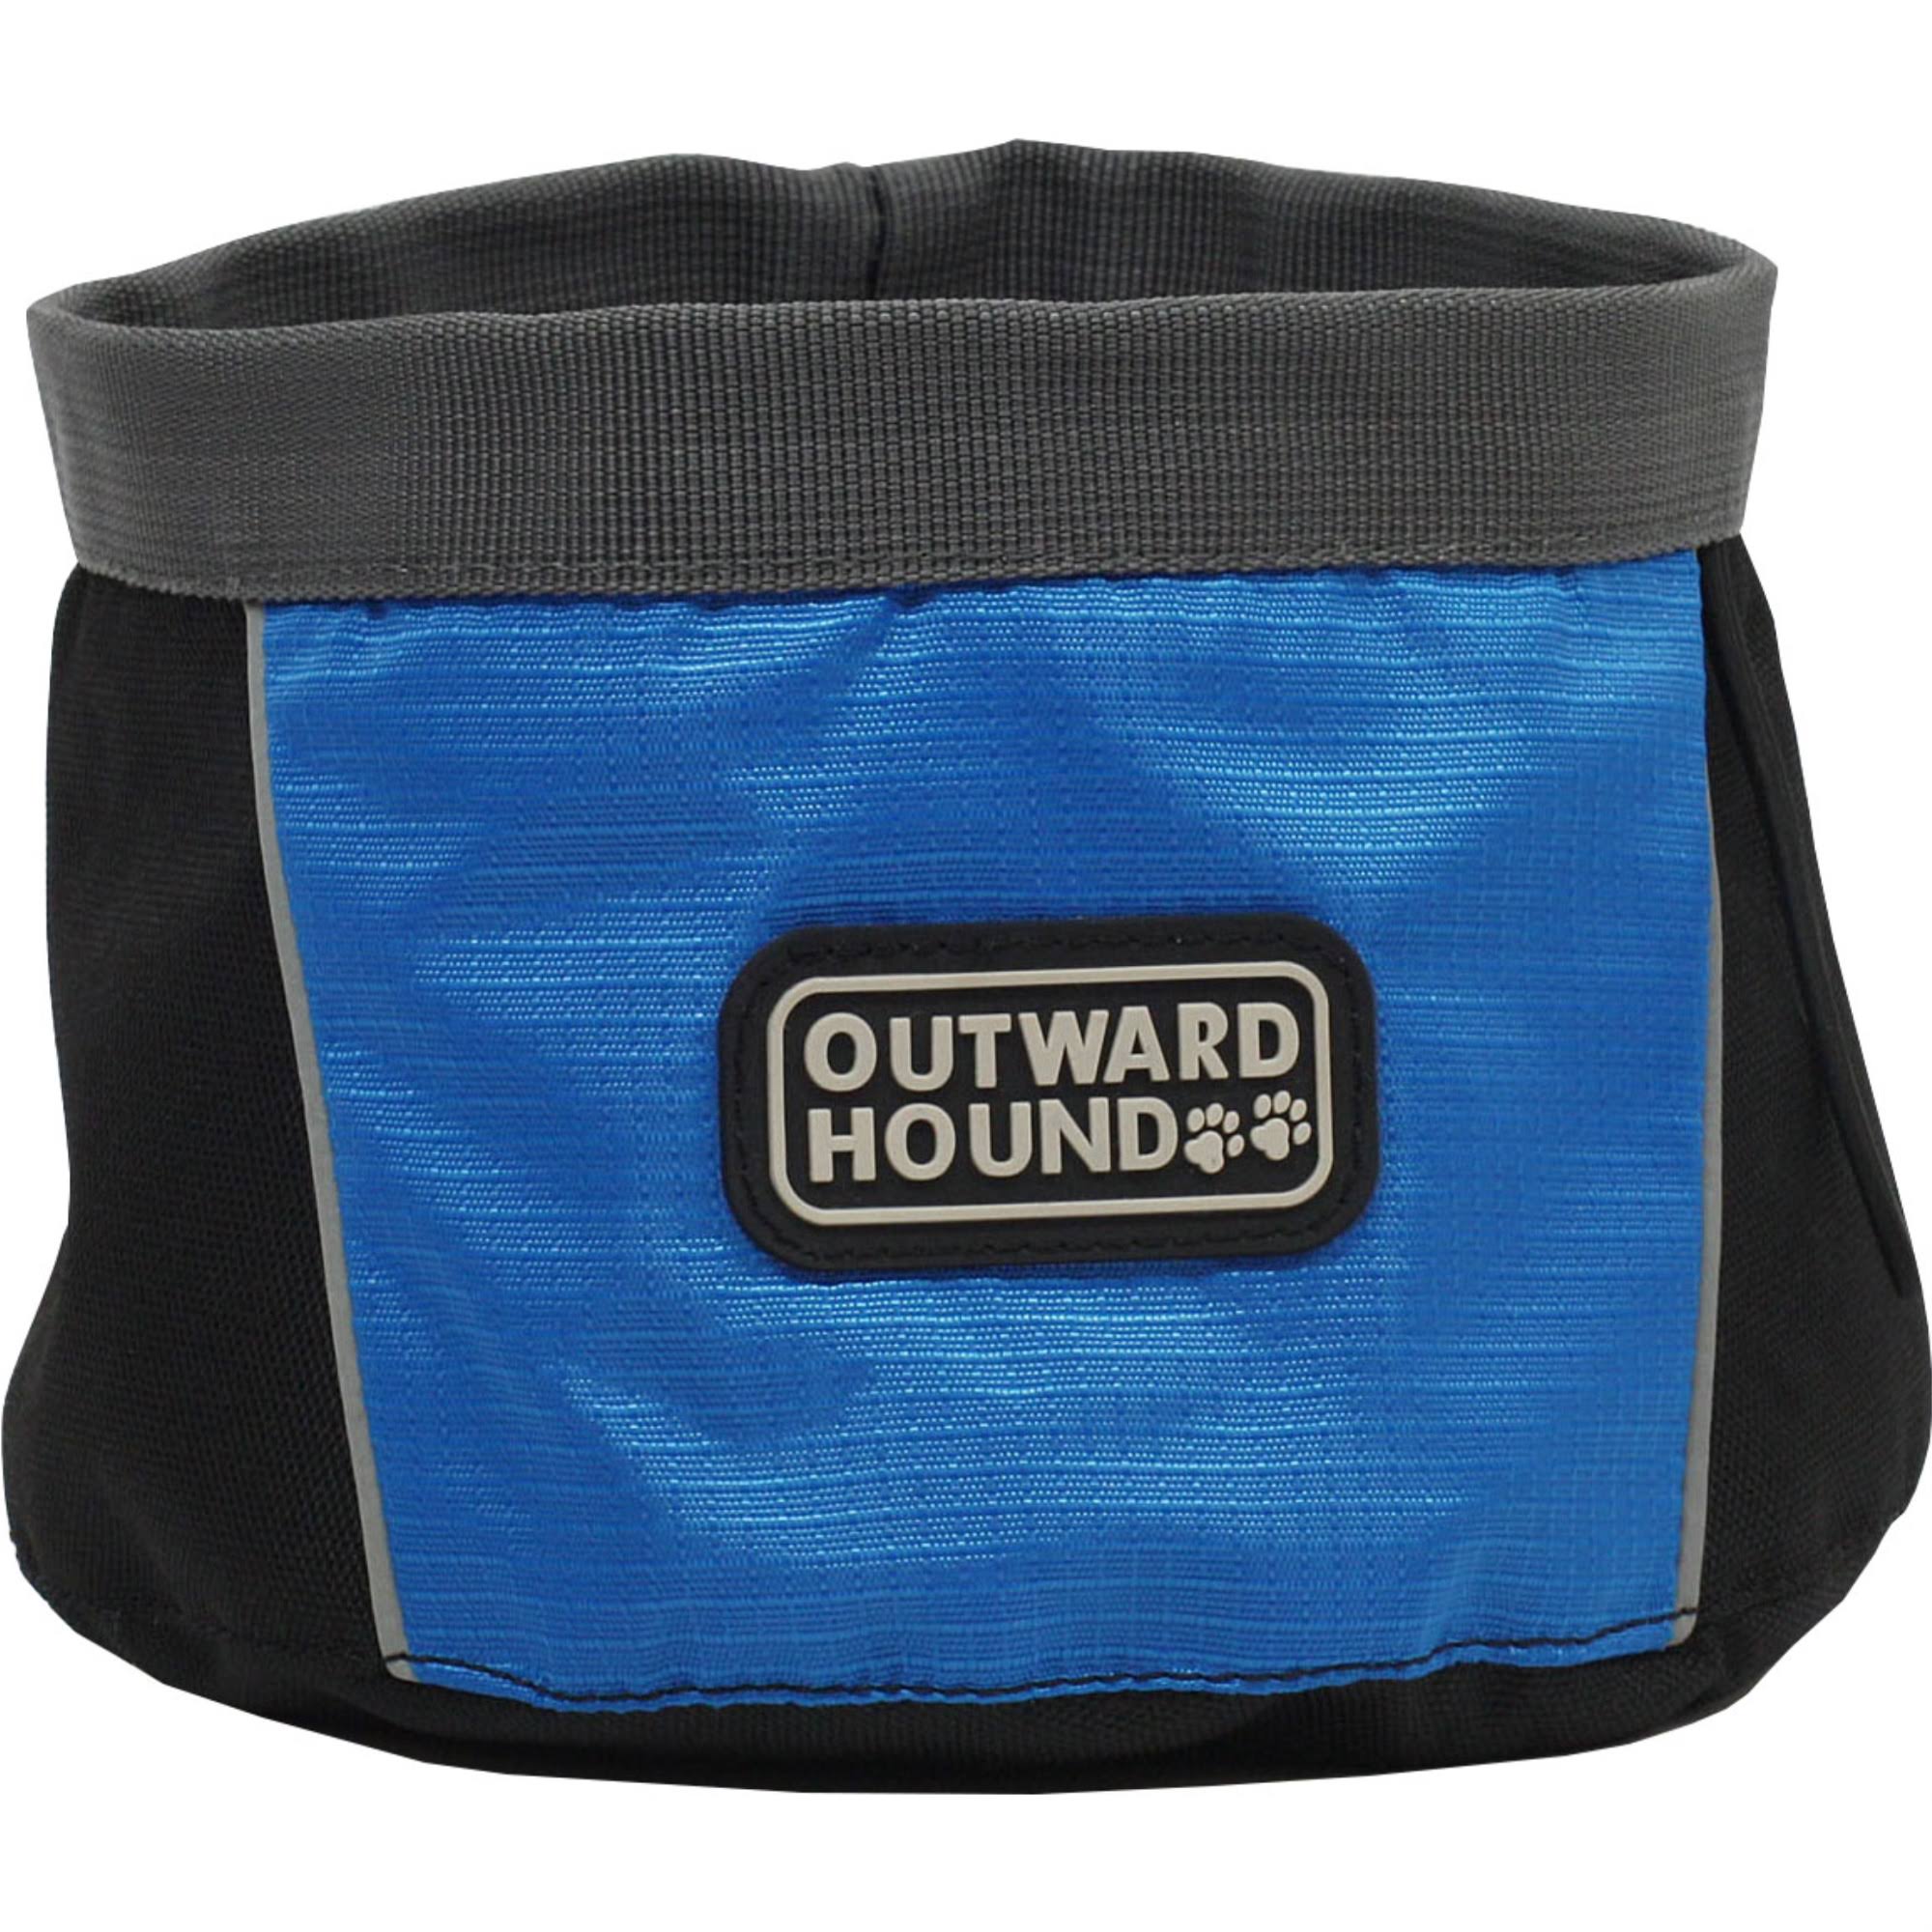 Outward Hound Kyjen Travel Dog Food Bowl - Blue, Large, Collapsible